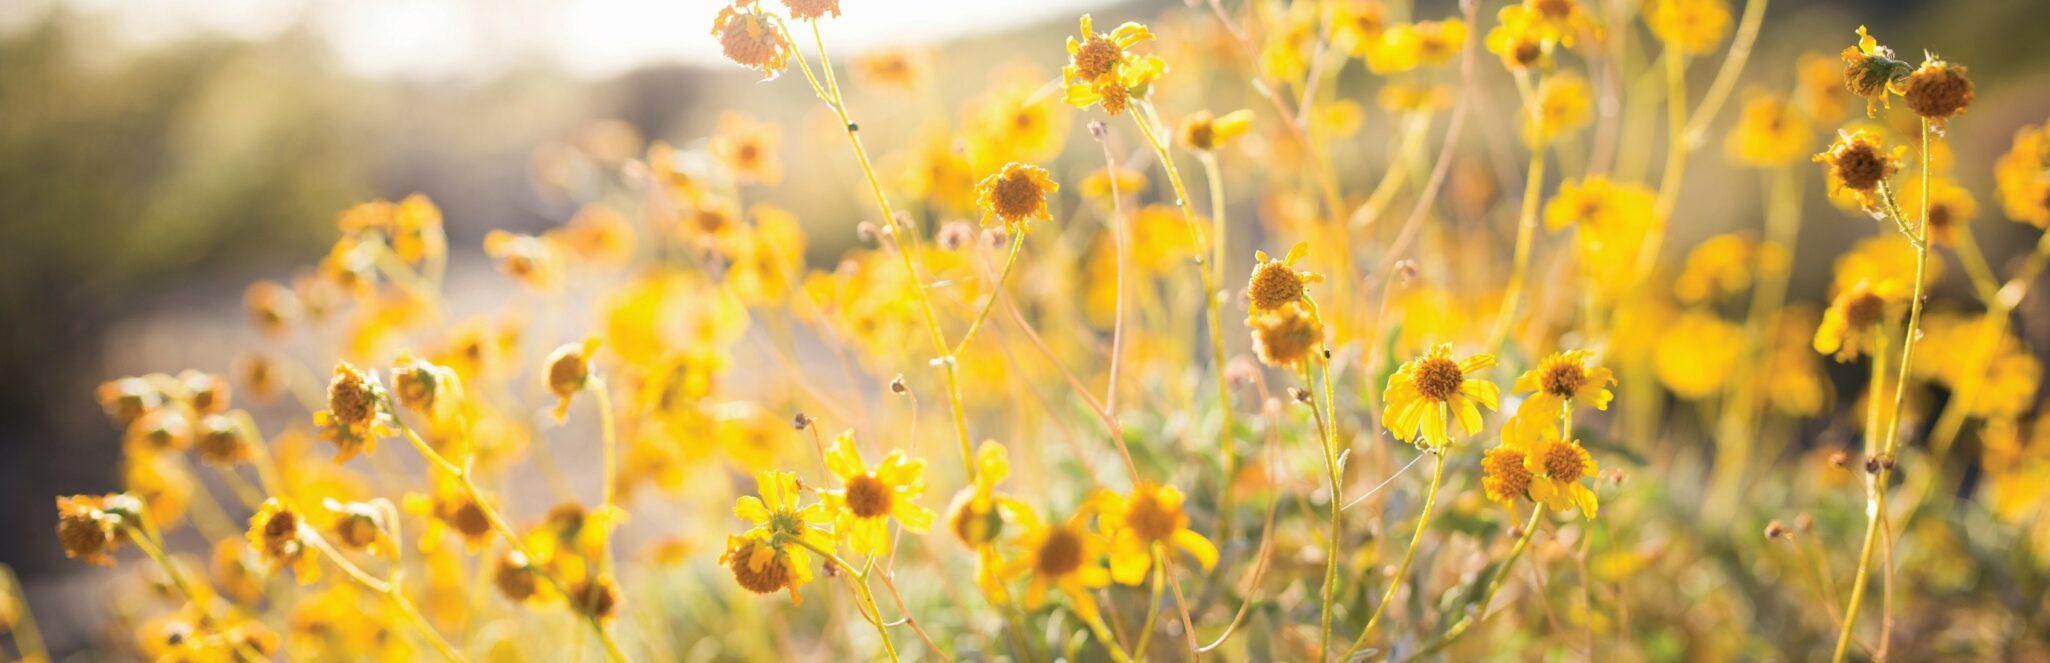 Yellow flowers in a field